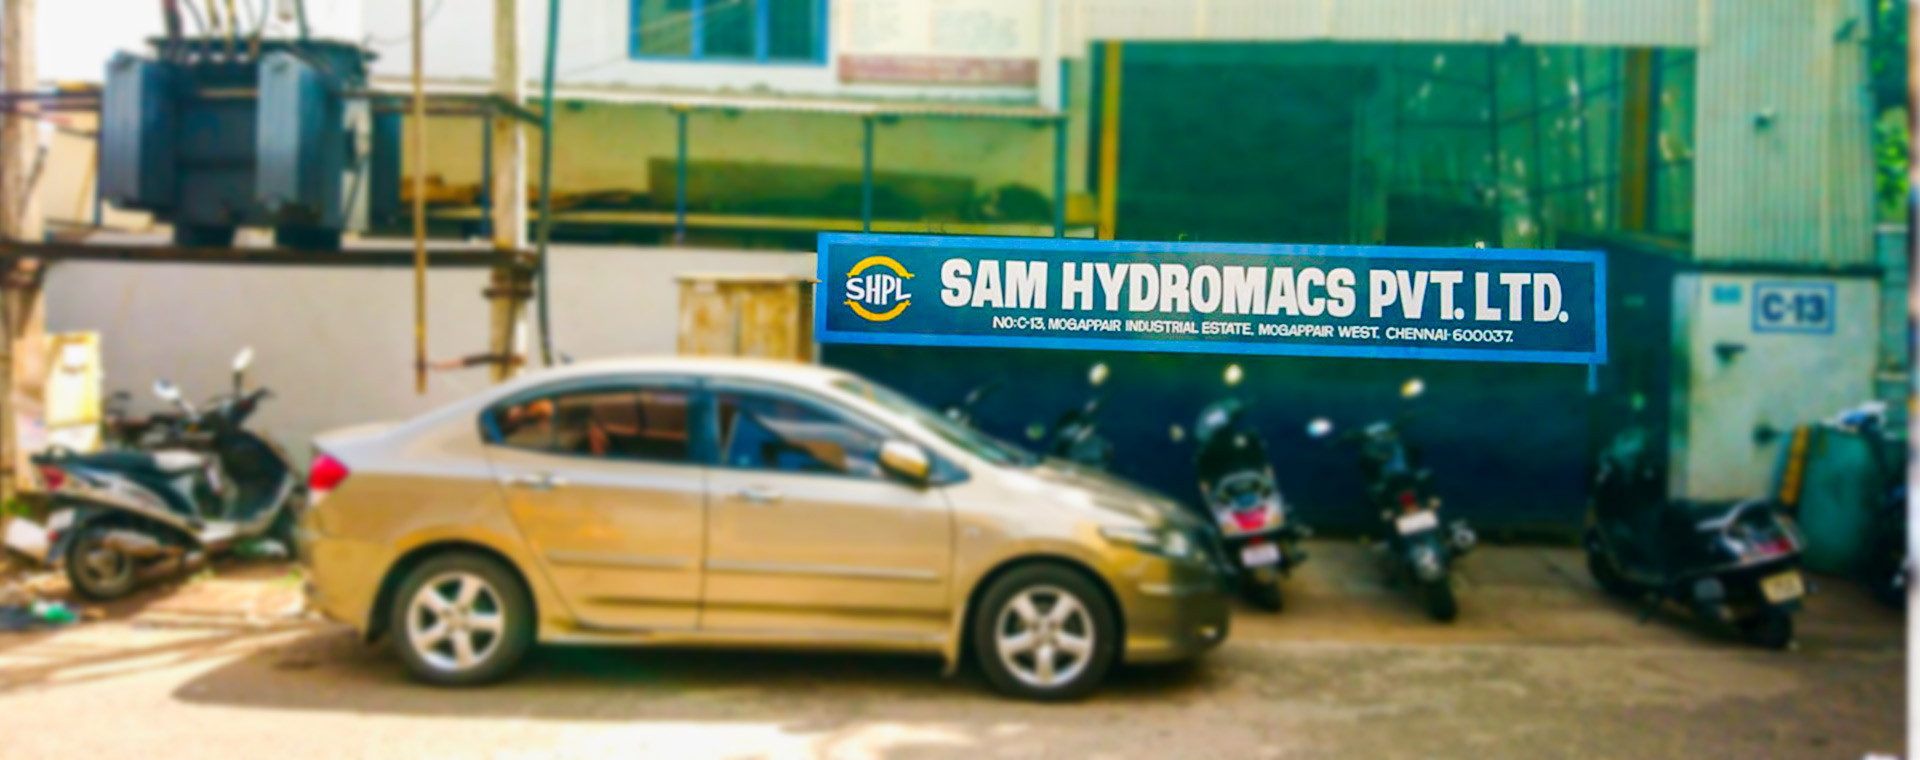 Sam Hydromacs : Industrial Equipment Manufacturer in Chennai